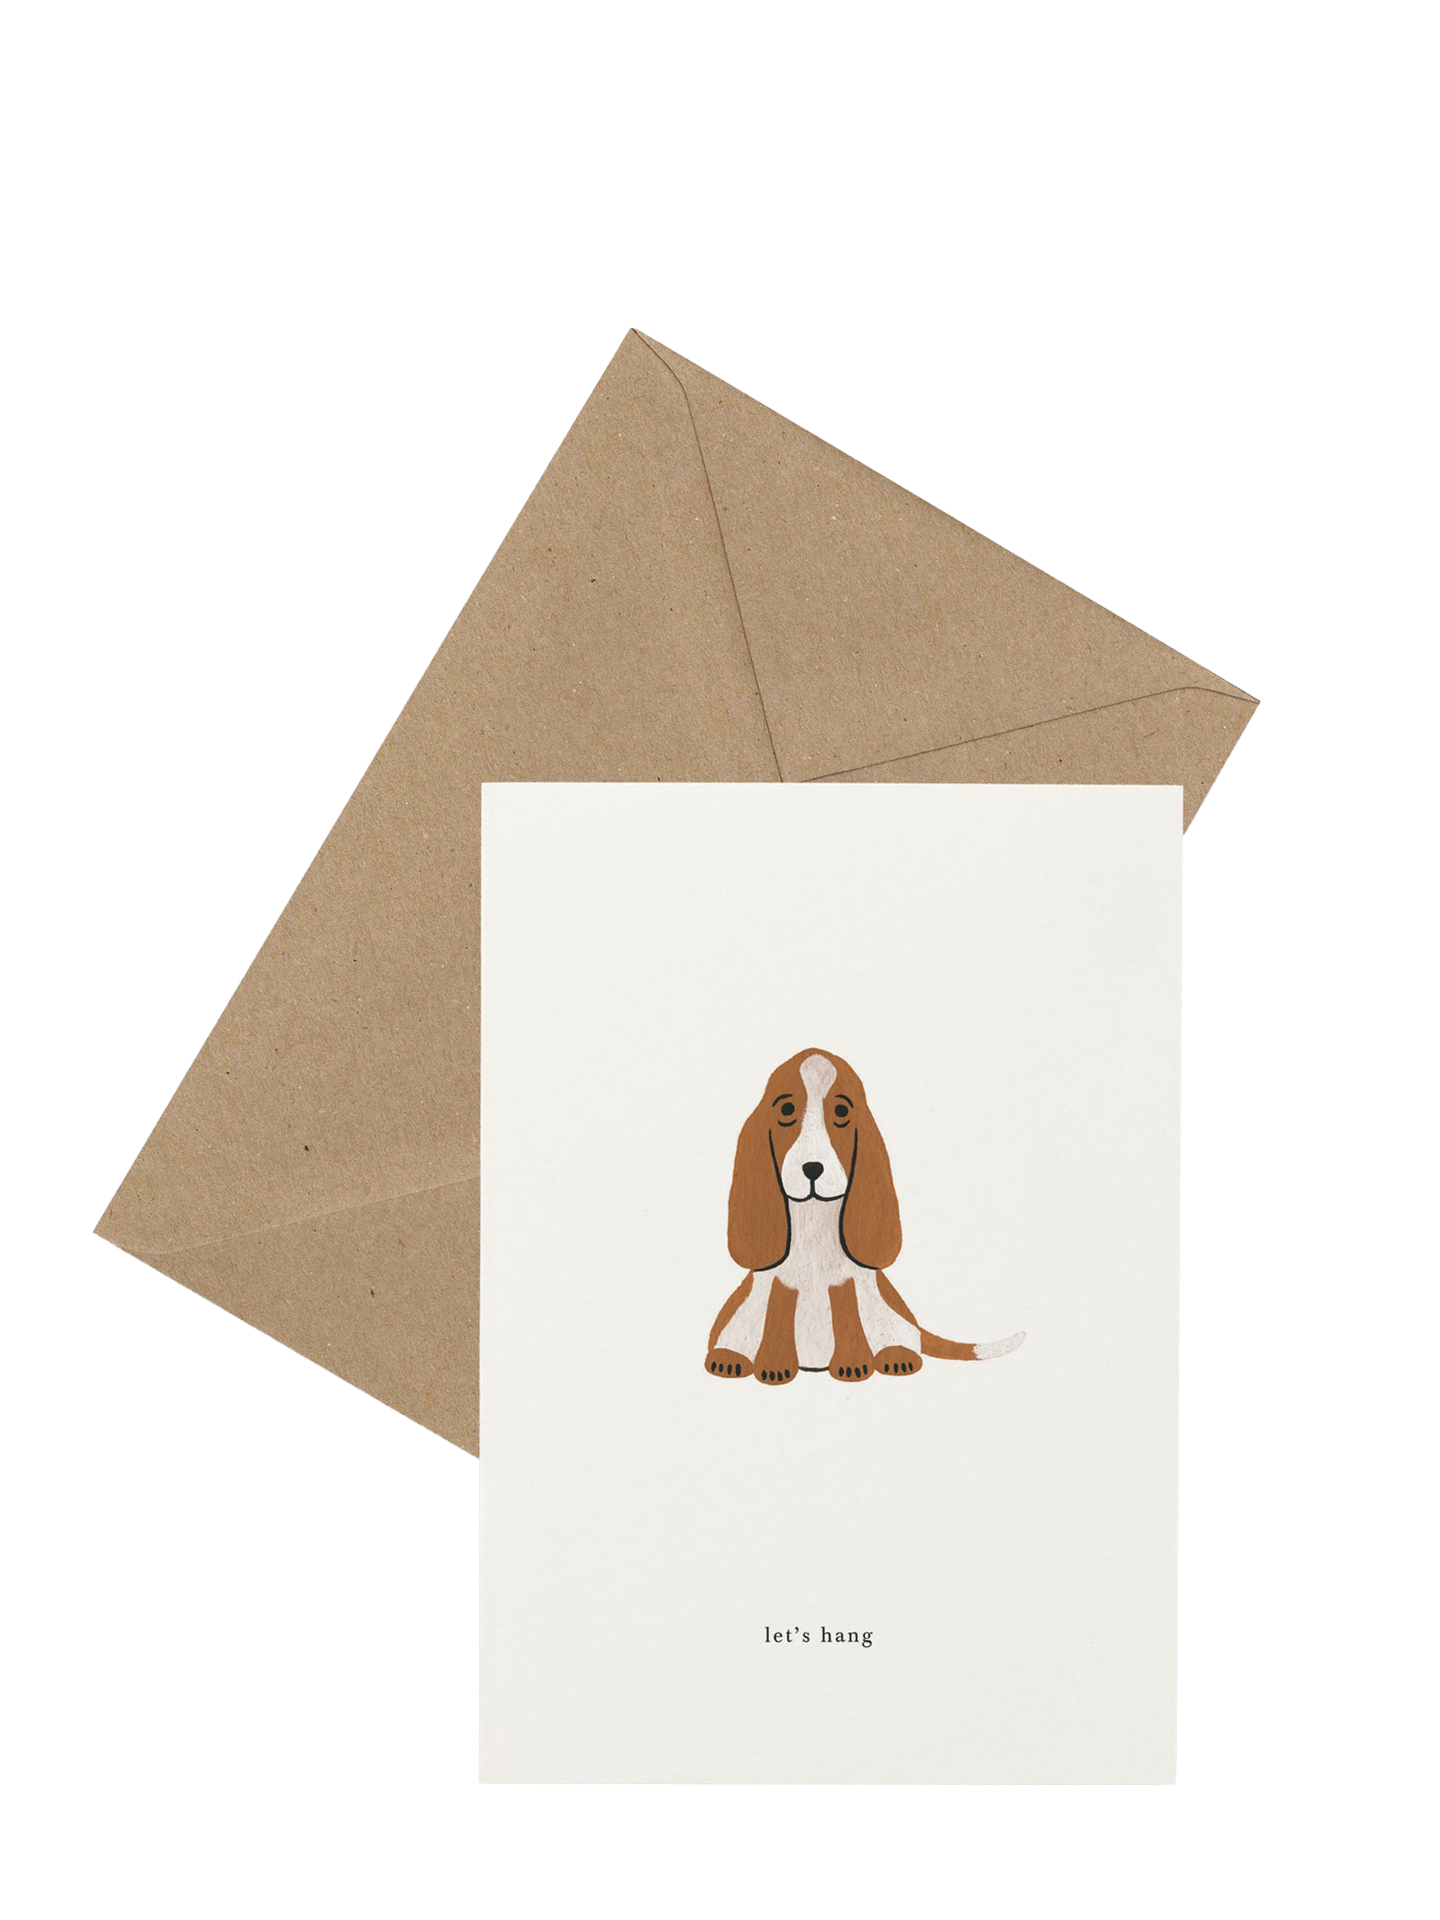 Basset hound card (let's hang) friendship card